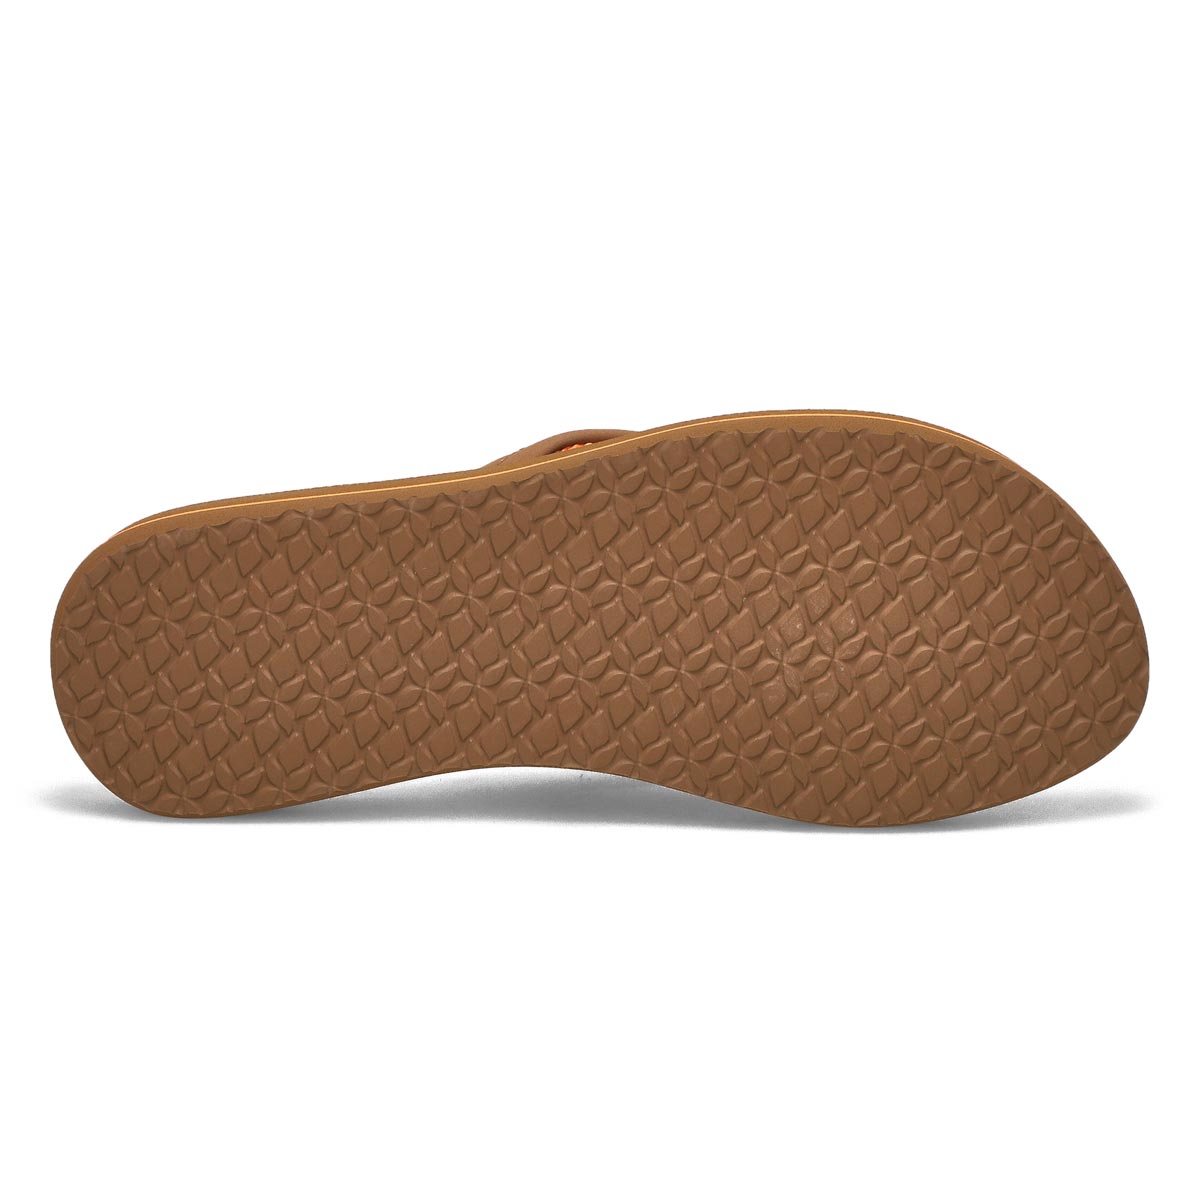 Women's Reef Cushion Breeze Sandal - Tan/Smoothie